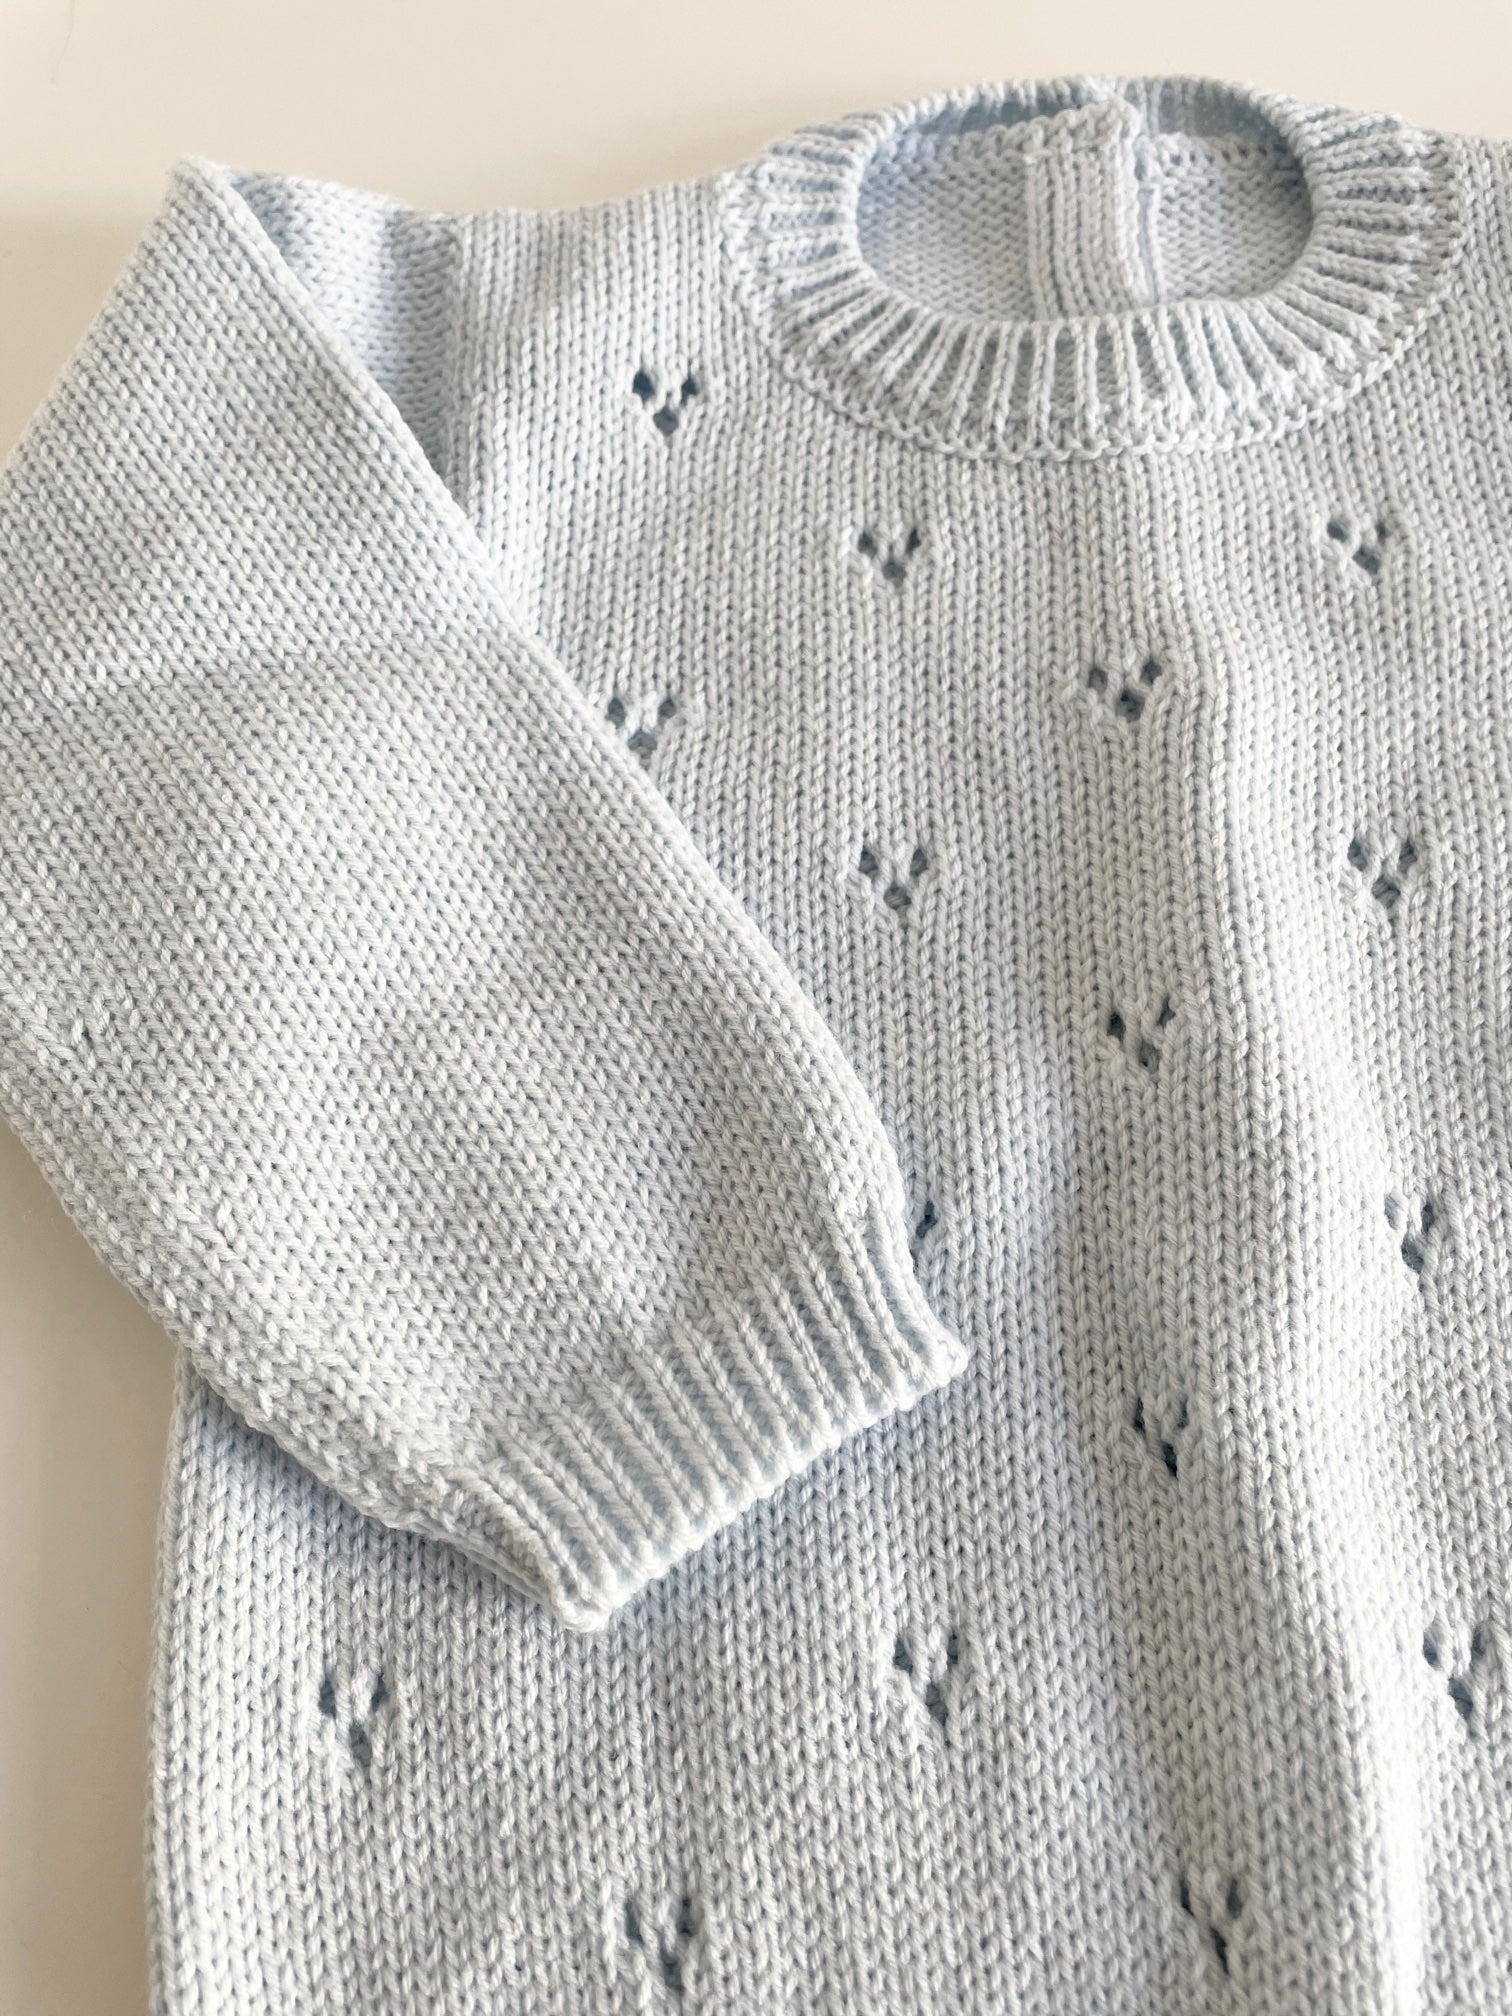 Baby pierced sweater (pre-order)